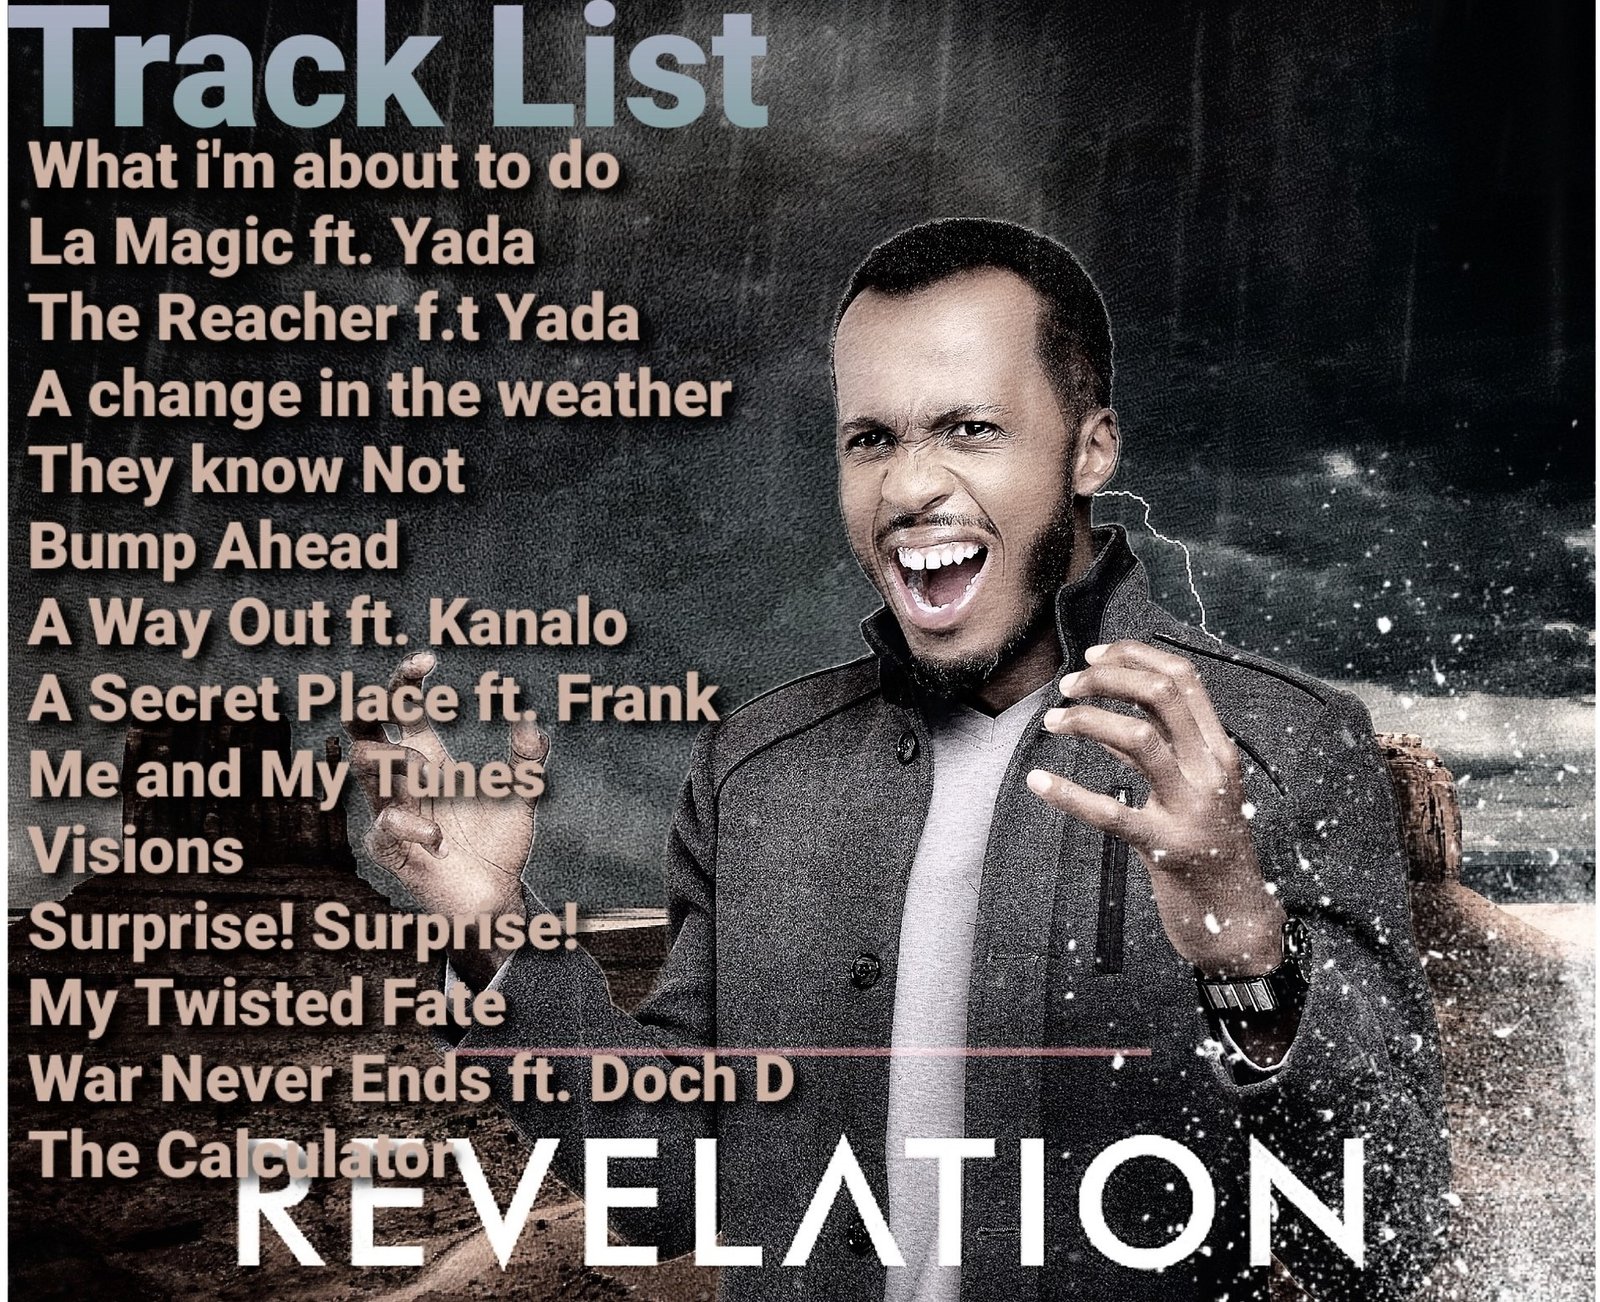 The Talented Ugandan Musician Dani B Music Drops his 15 track LP Titled "Revelation"